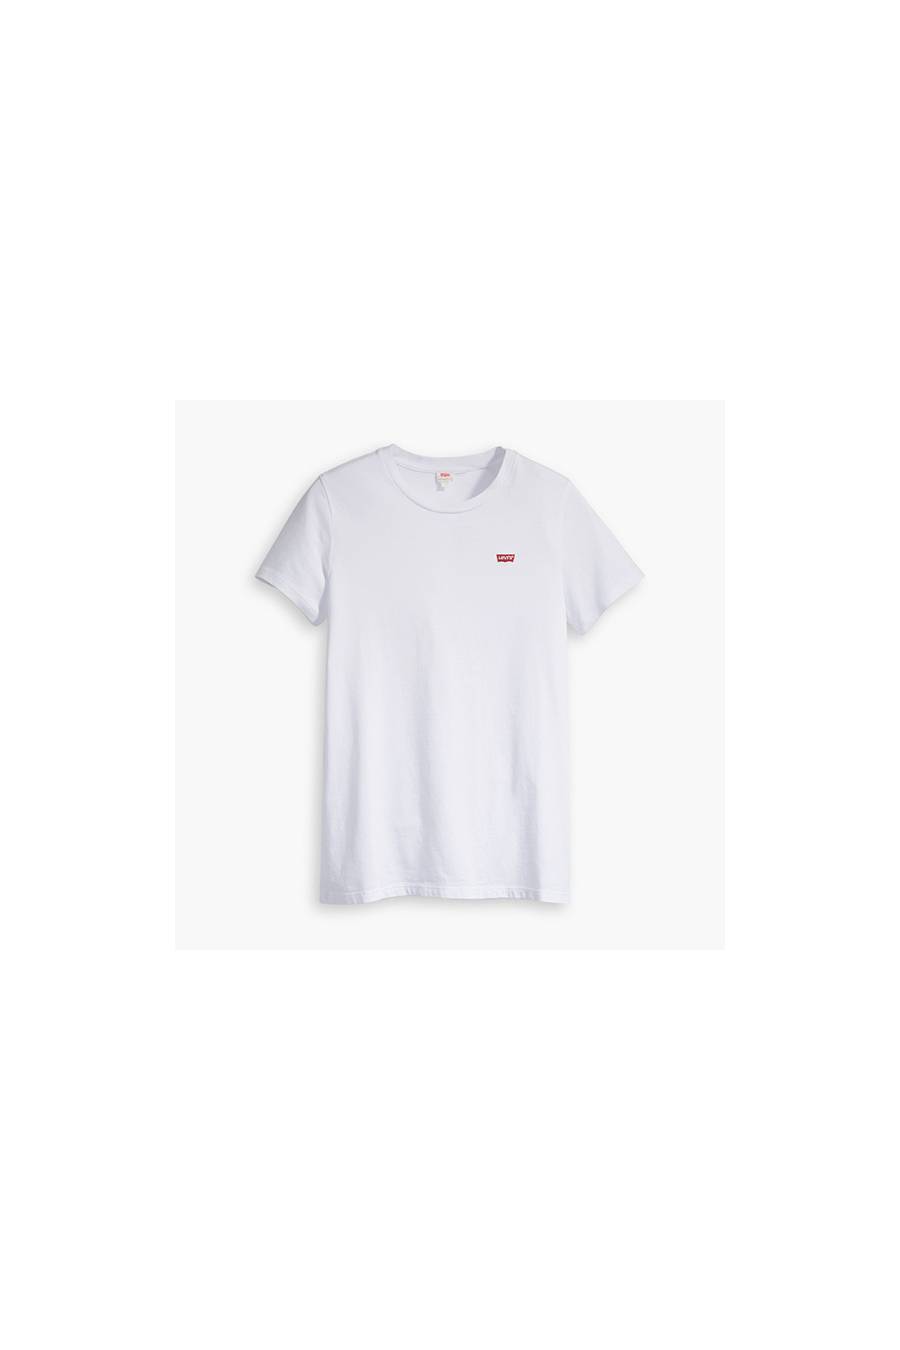 Camiseta Levi's Perfect Tee mujer 39185-0006 - msdsport